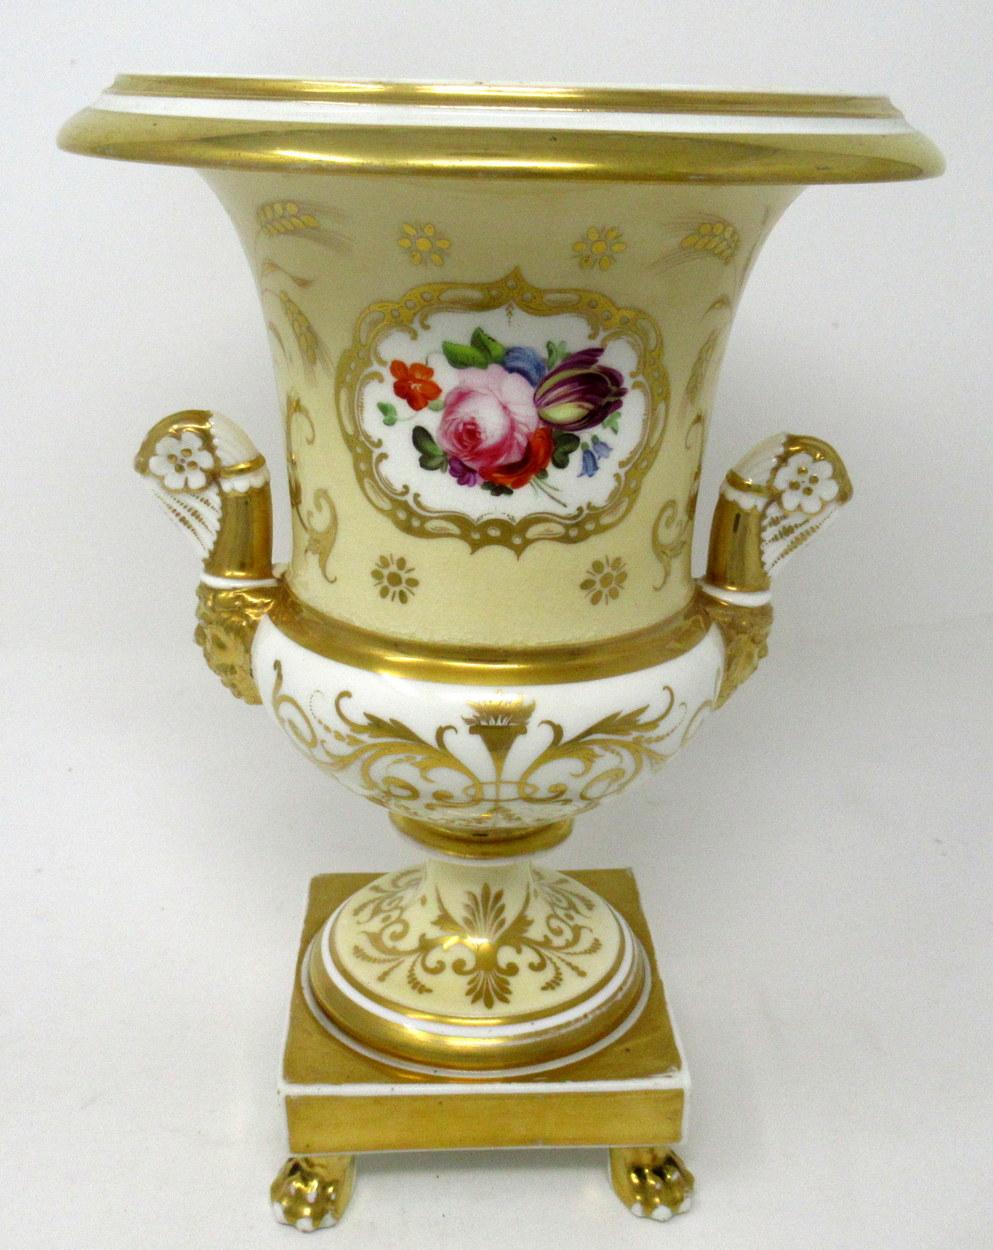 English Coalport Campana Porcelain Vase Urn Hand Painted Still Life Flowers 19th Century